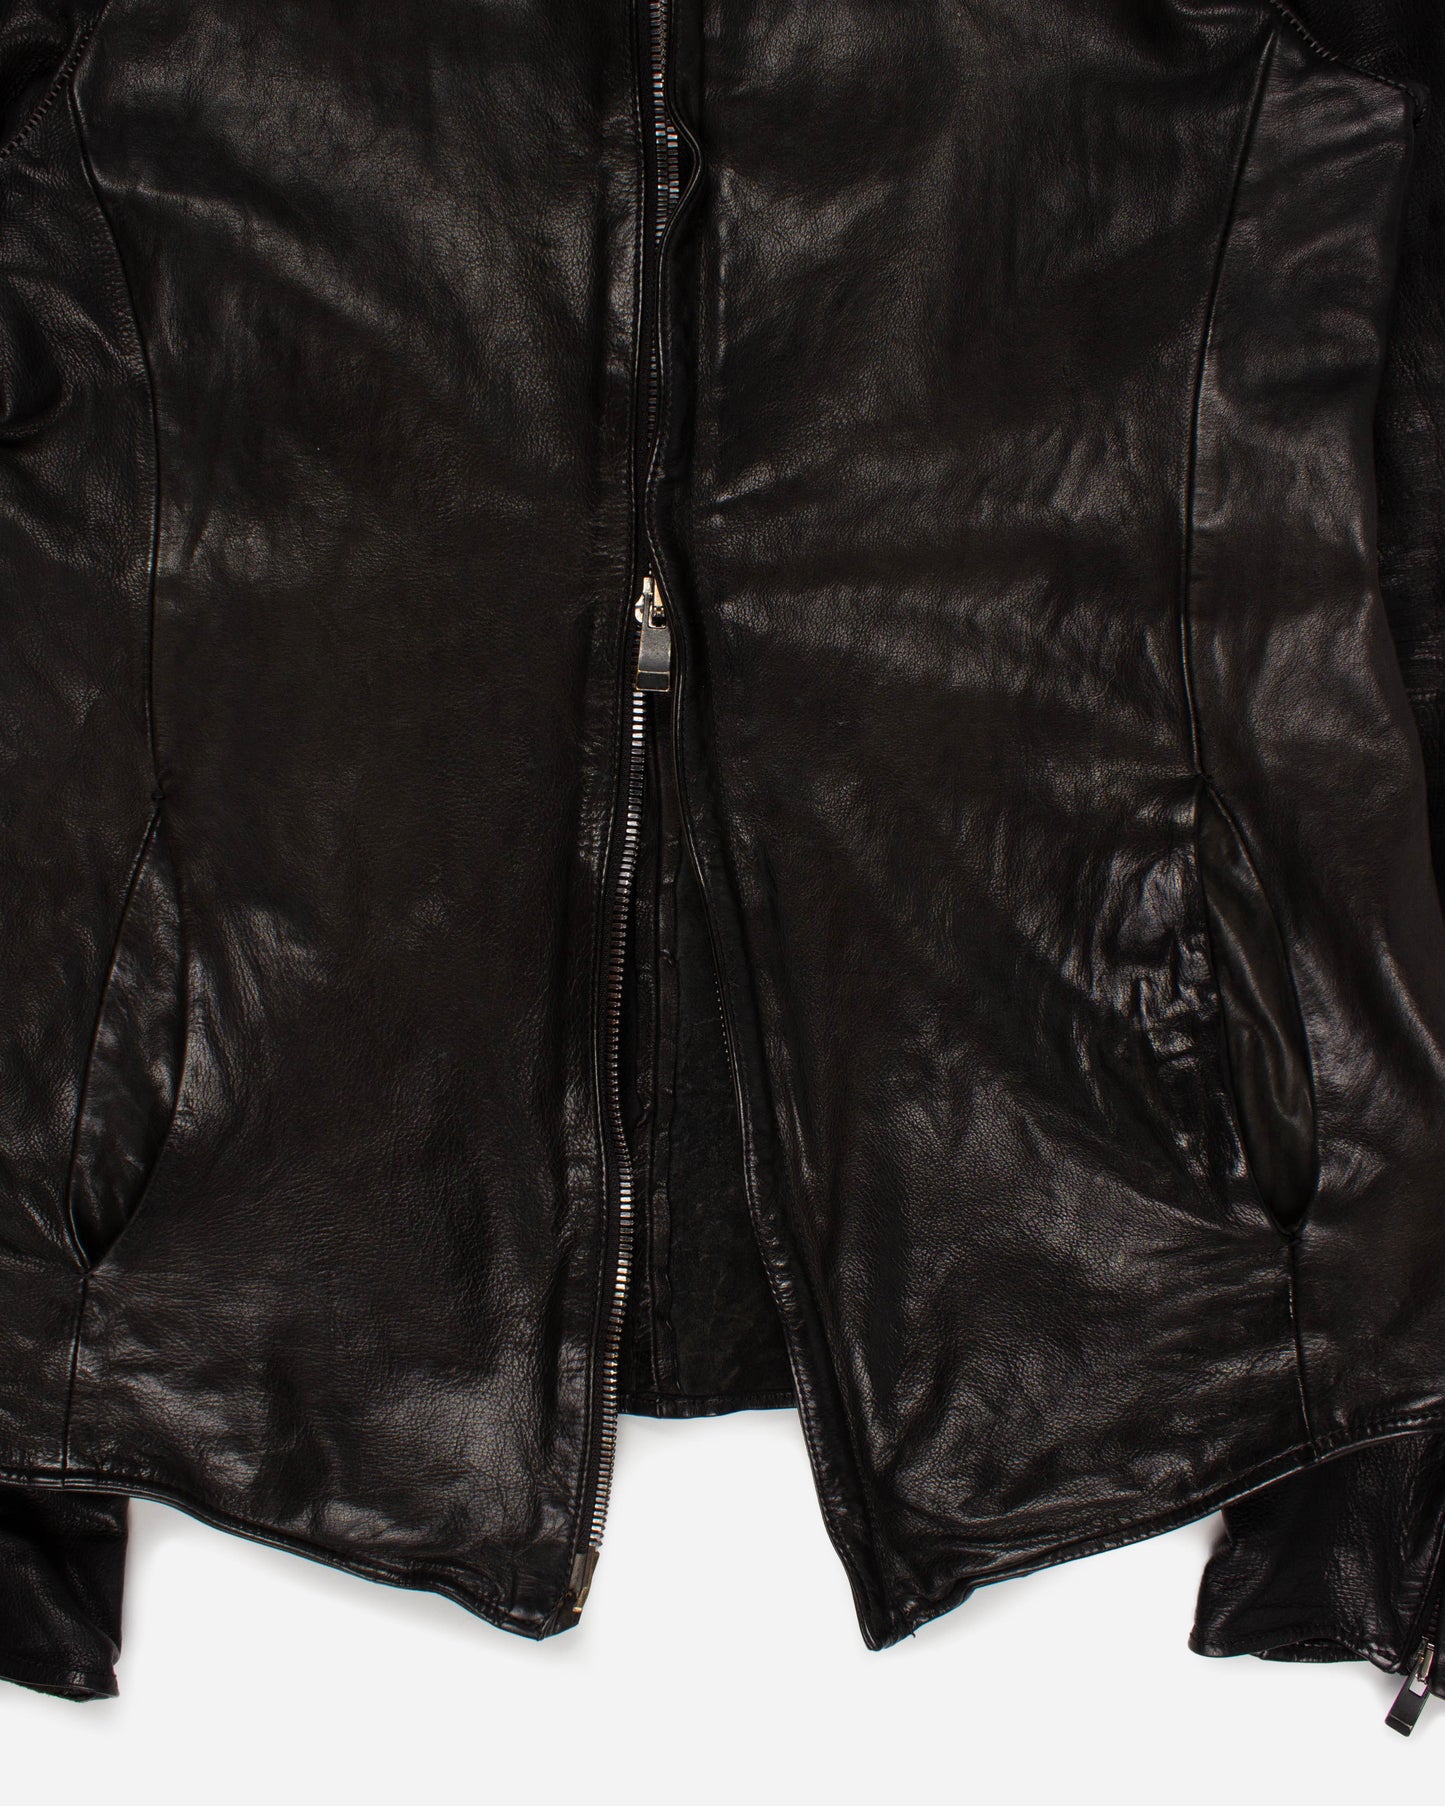 Overlock High Neck Leather Jacket